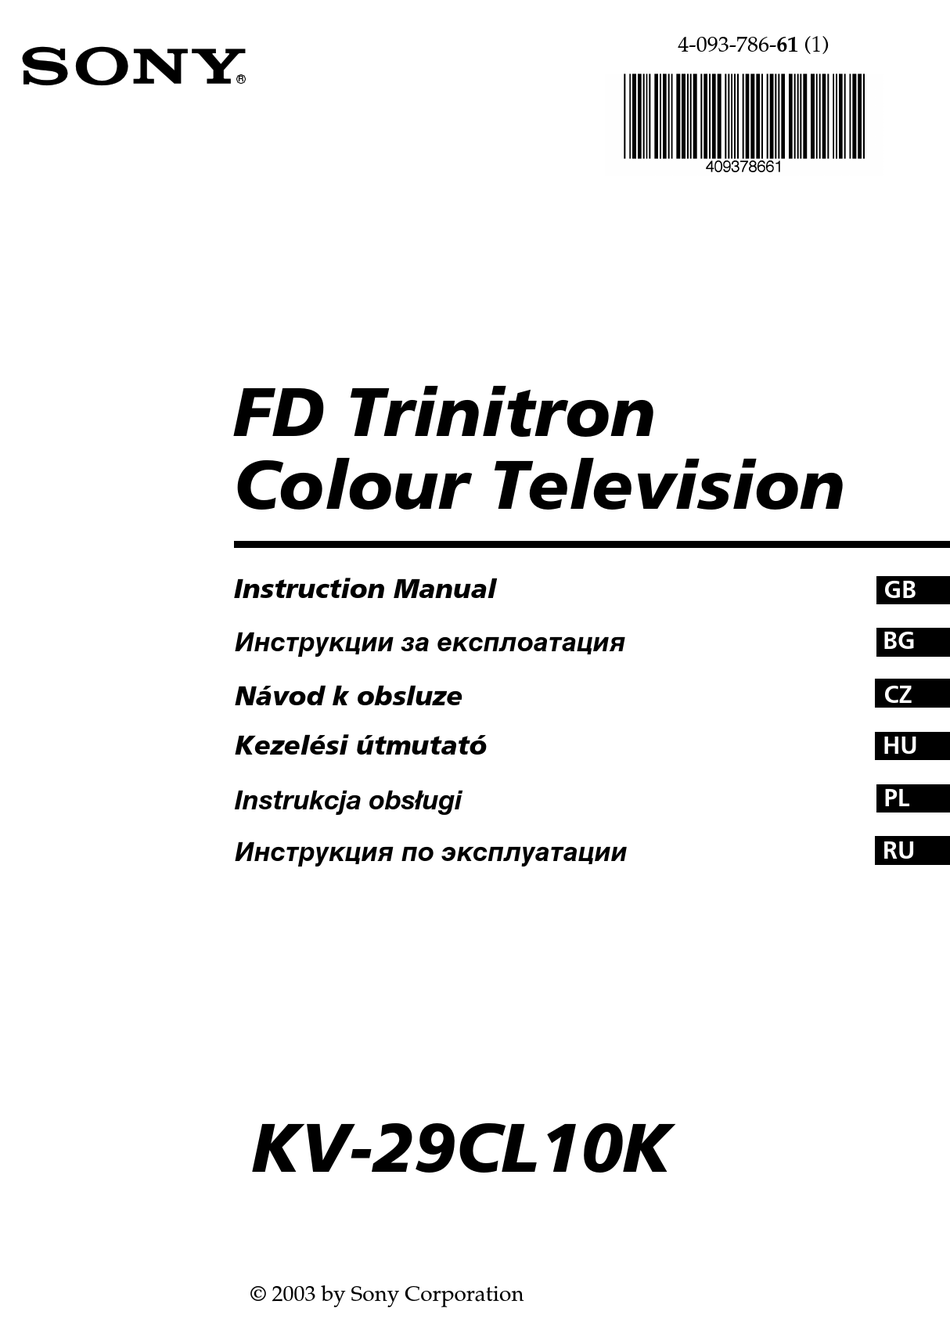 Sony Fd Trinitron Kv 29cl10k Instruction Manual Pdf Download Manualslib